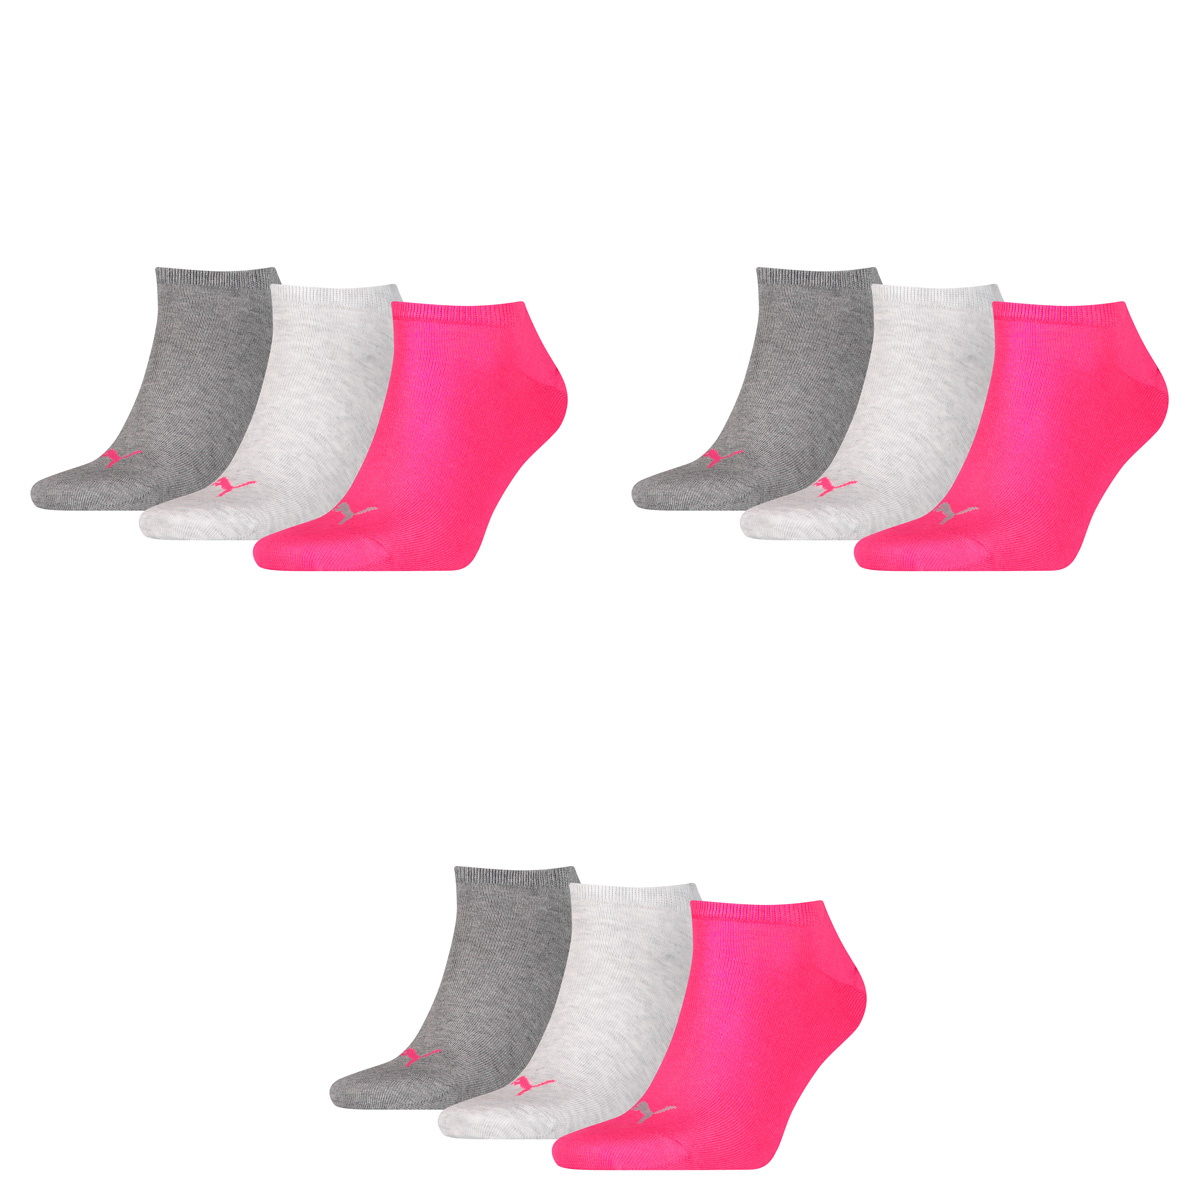 Puma unisex Sneaker Socken Kurzsocken Sportsocken 261080001 6 Paar, Farbe:Mehrfarbig, Menge:6 Paar (2 x 3er Pack), Größe:35-38, Artikel:-656 middle grey melange/pink